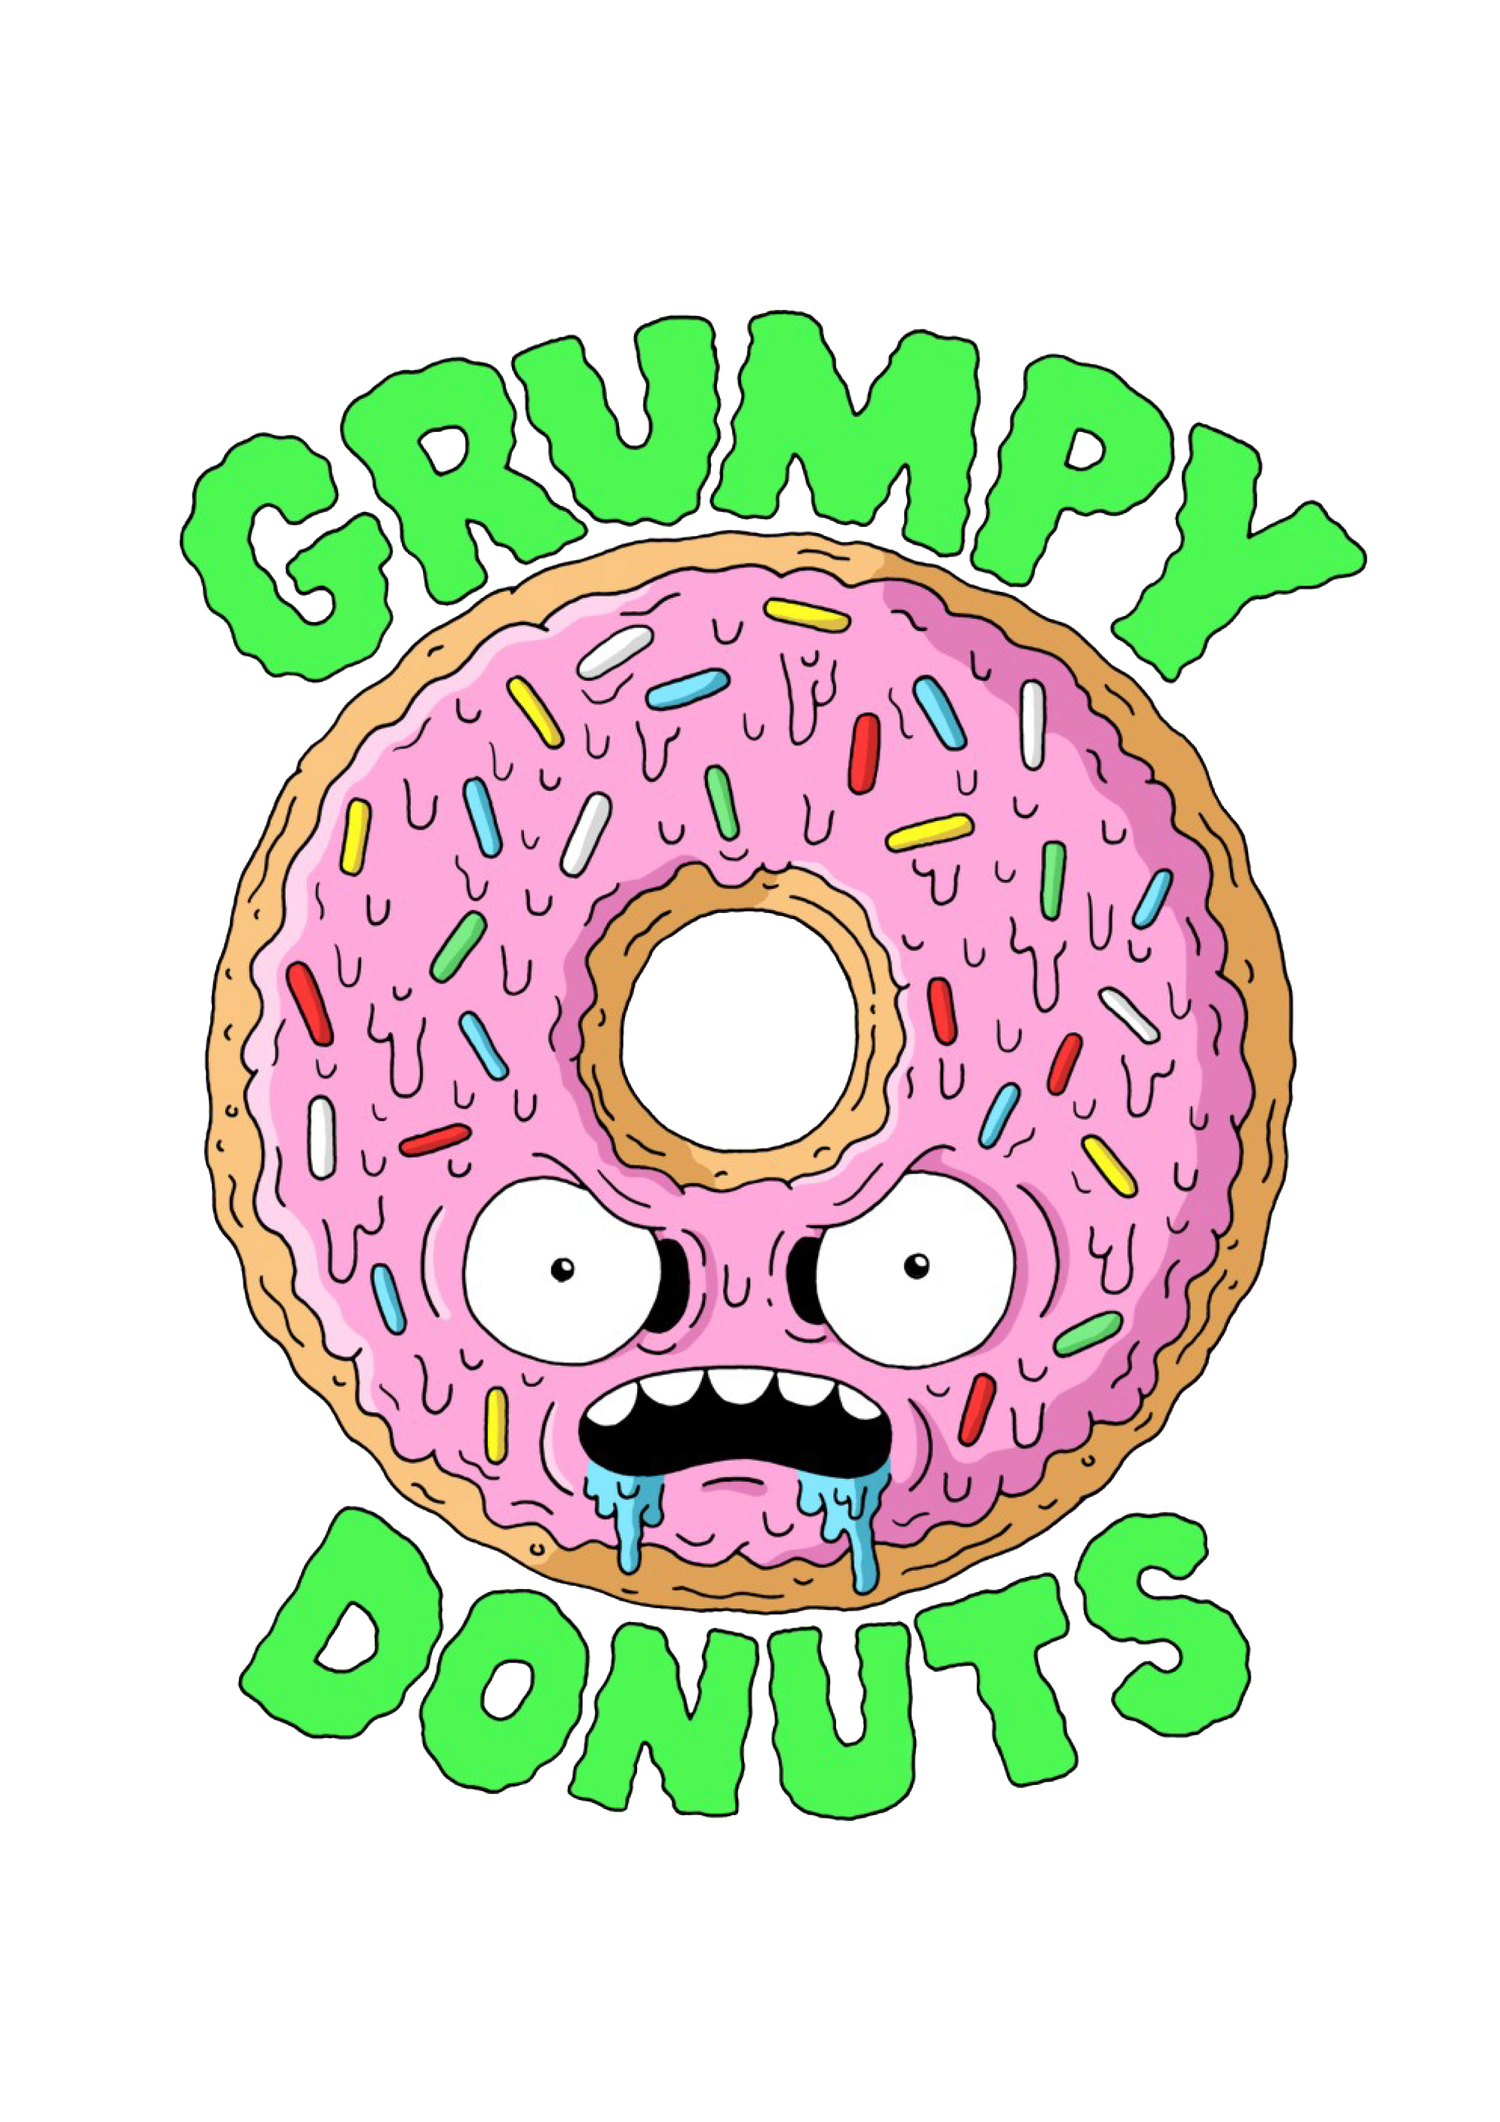  Grumpy Donuts - Sydney, Australia